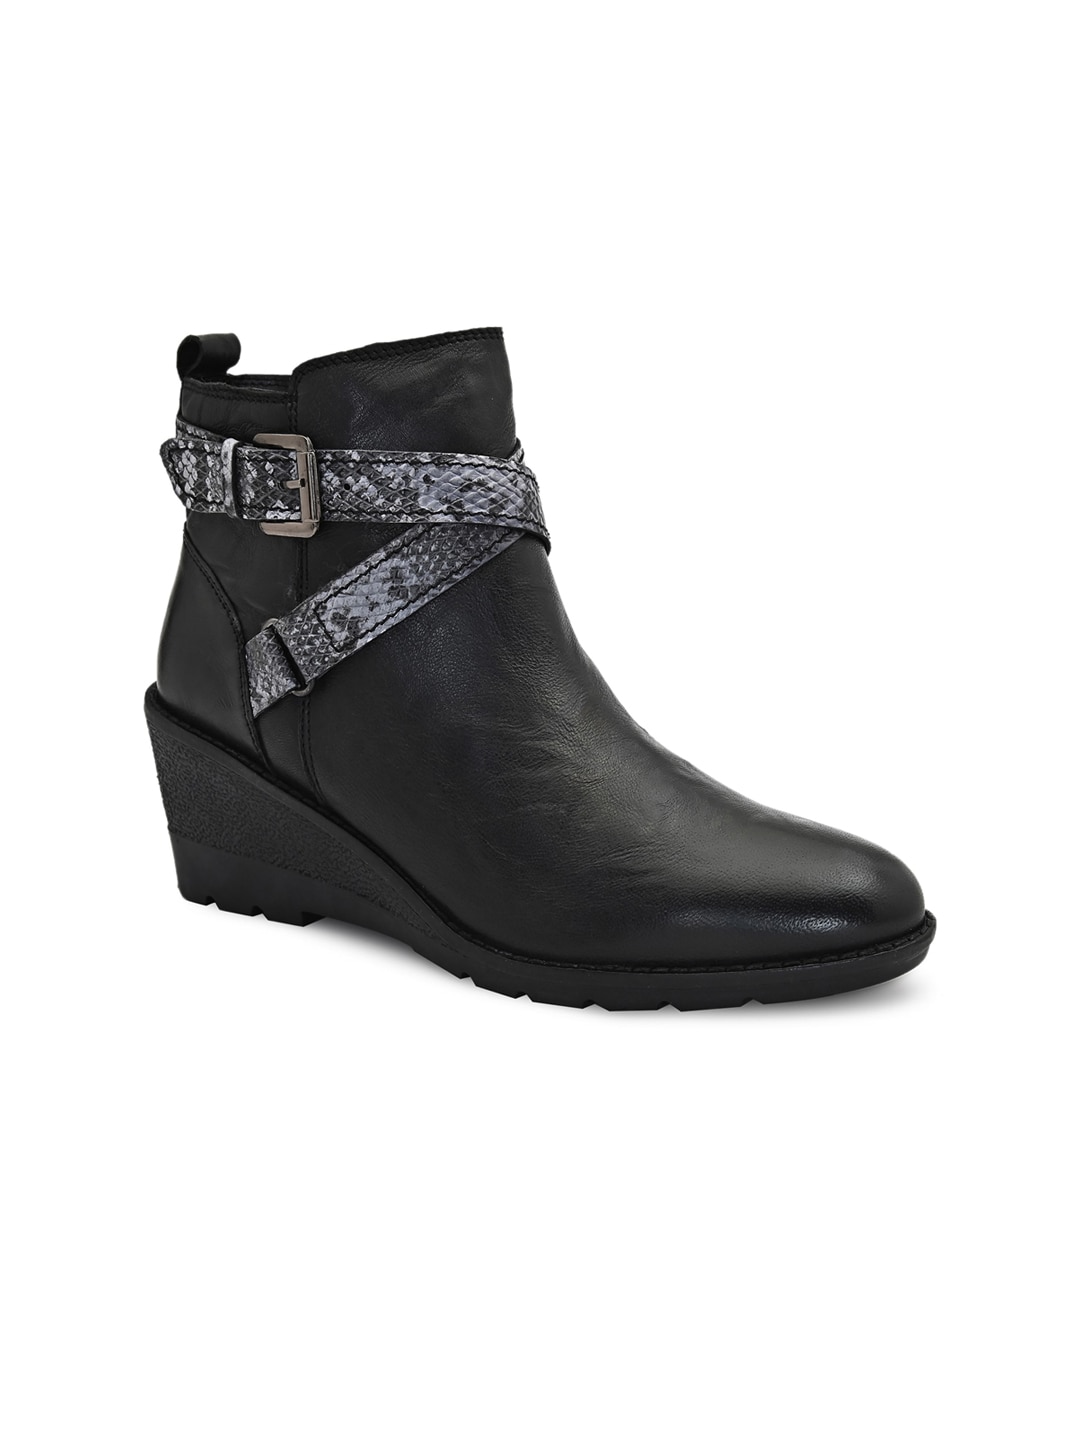 Alberto Torresi Black Leather Wedge Heeled Boots Price in India